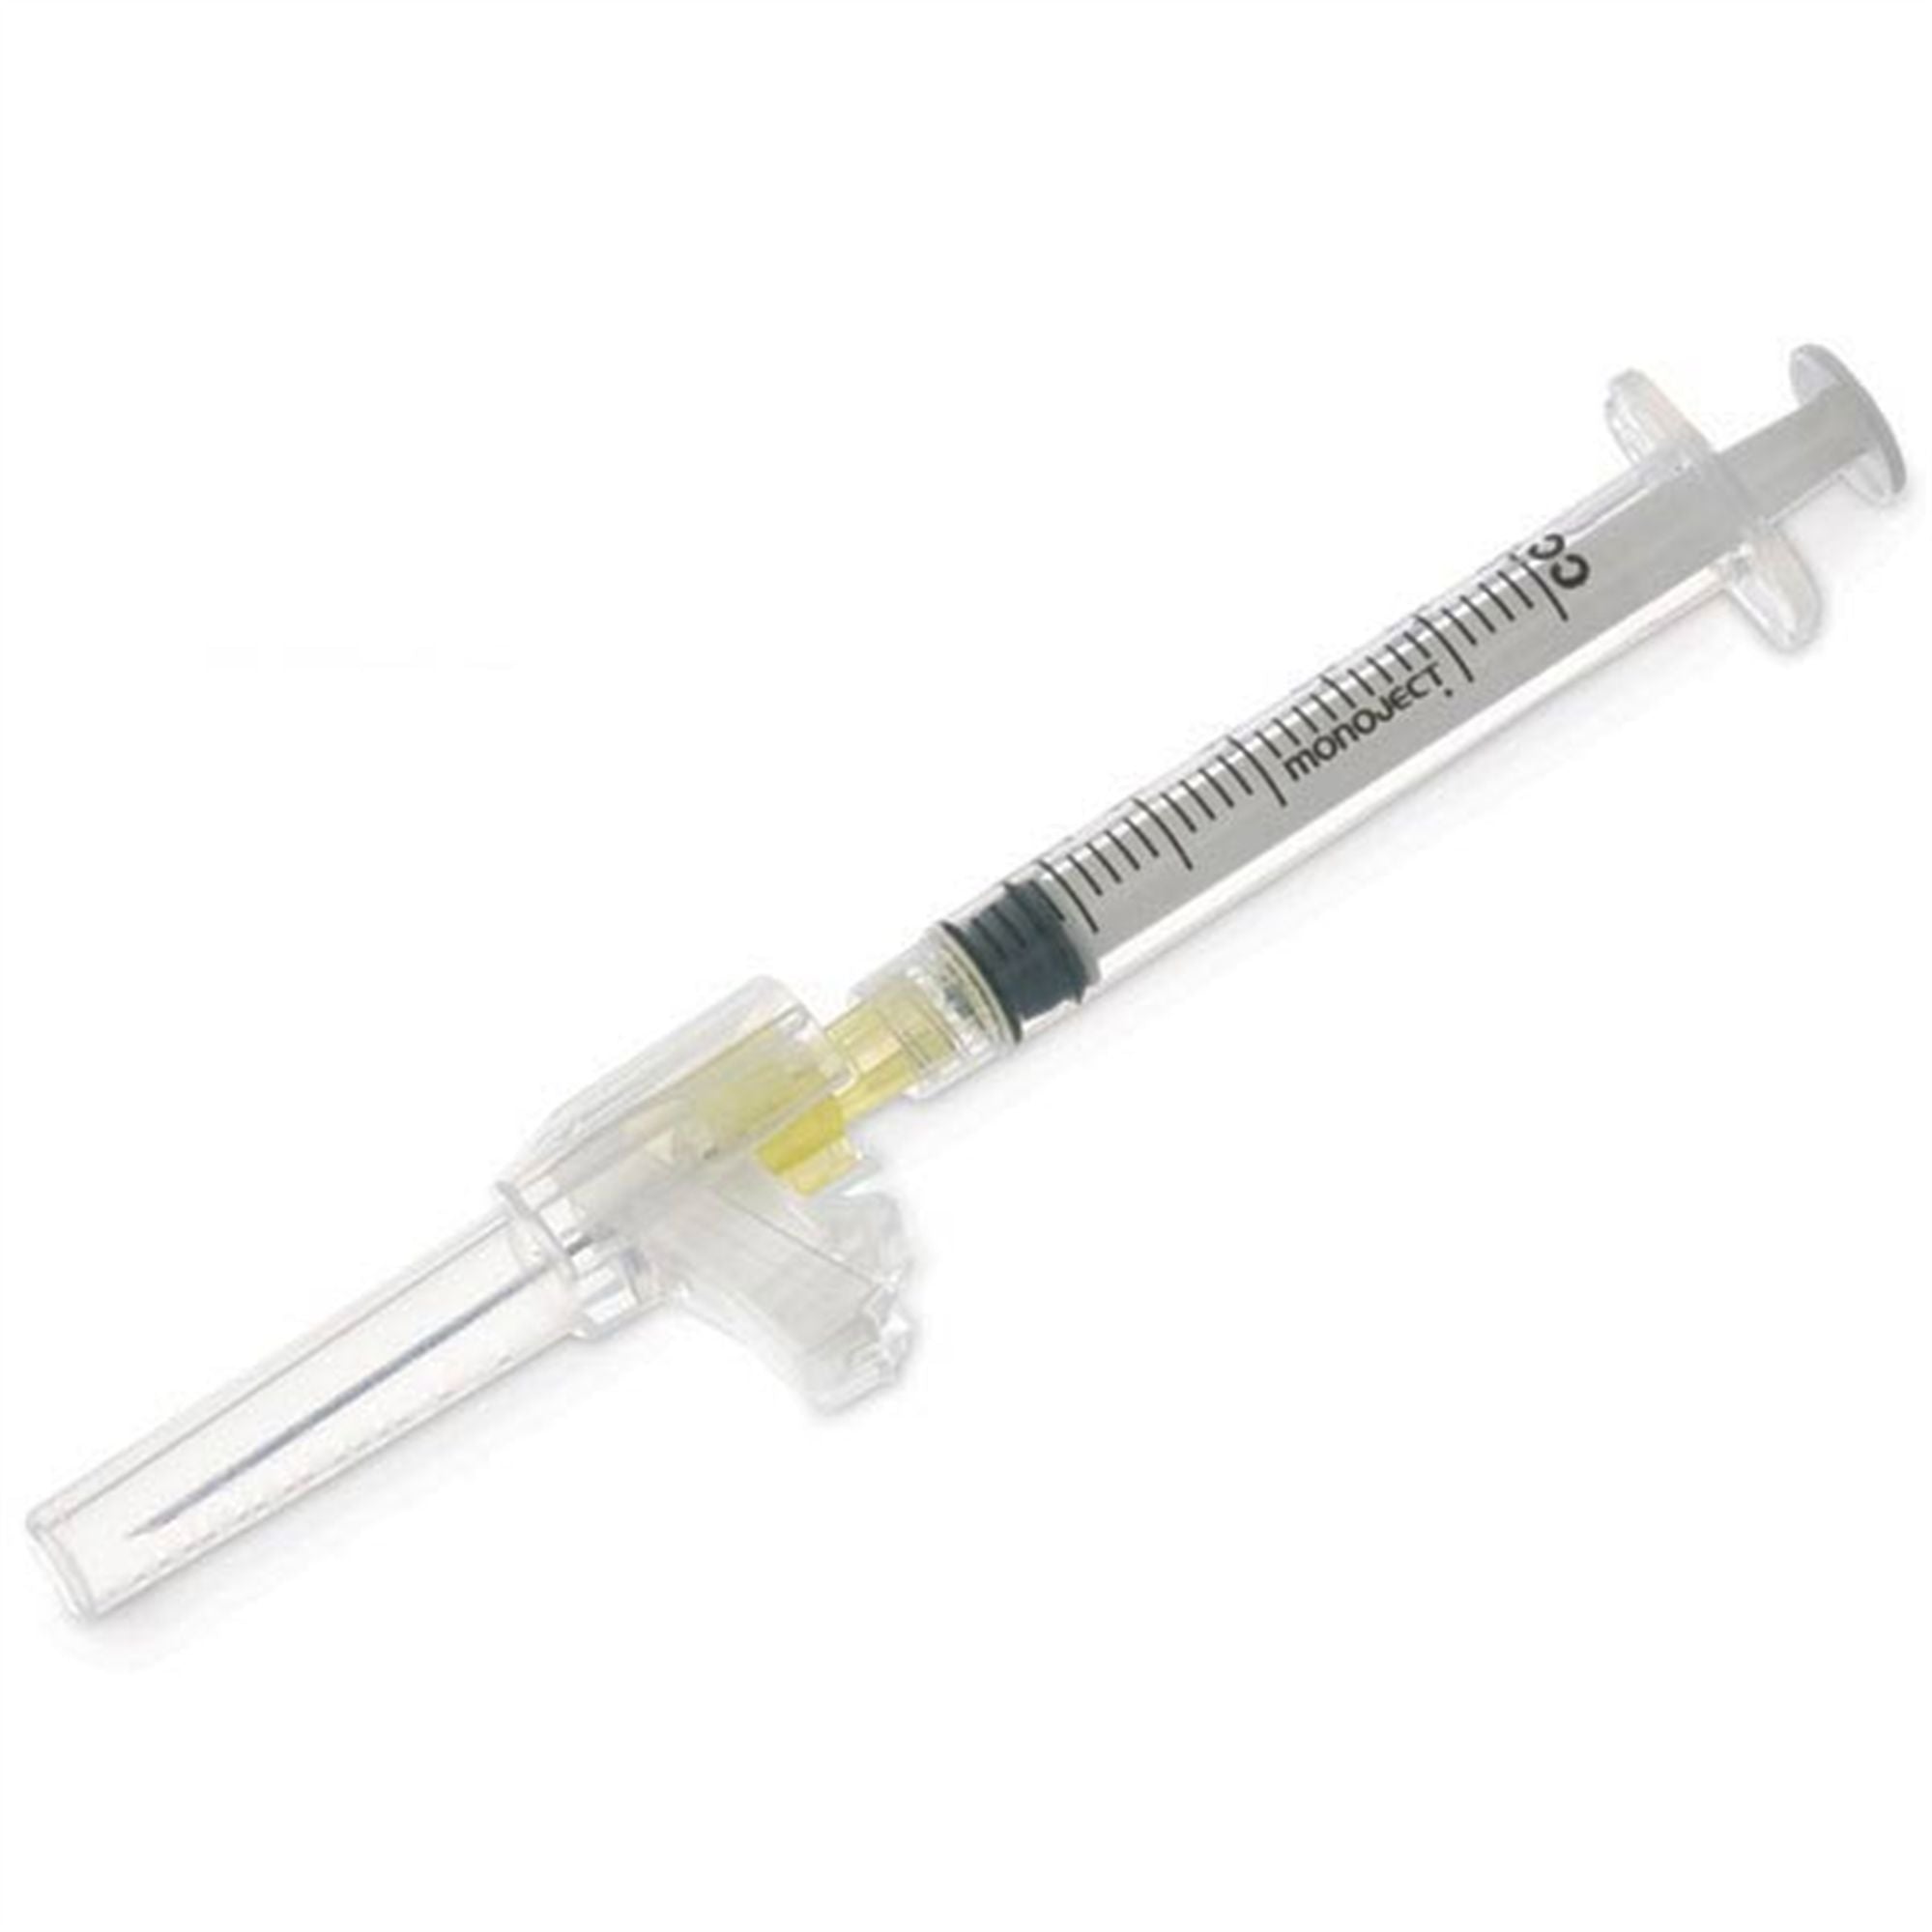 Monoject Luer Lock Syringe W/Needle [3 mL - 20 X 3/4] (1 Count)